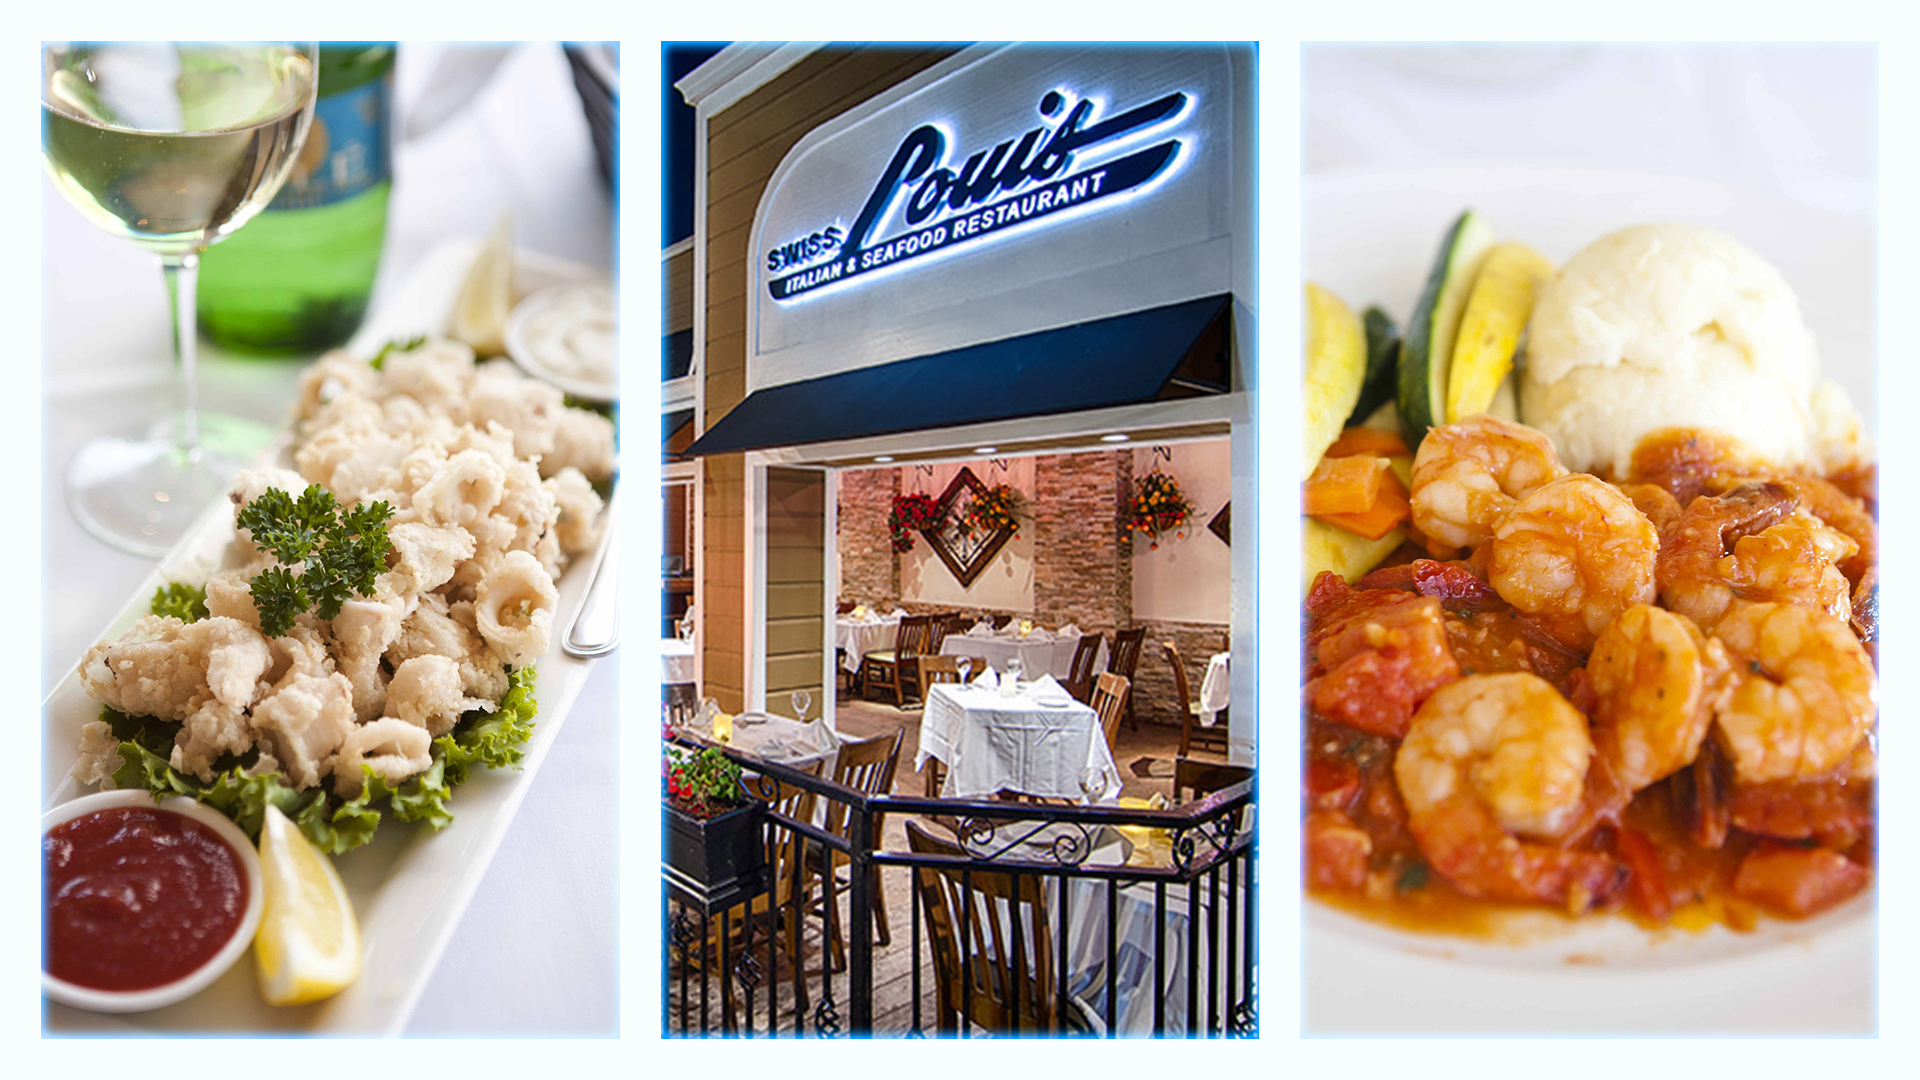 National ENQ Review of Swiss Louis Italian & Seafood Restaurant – Pier 39, San Francisco, California